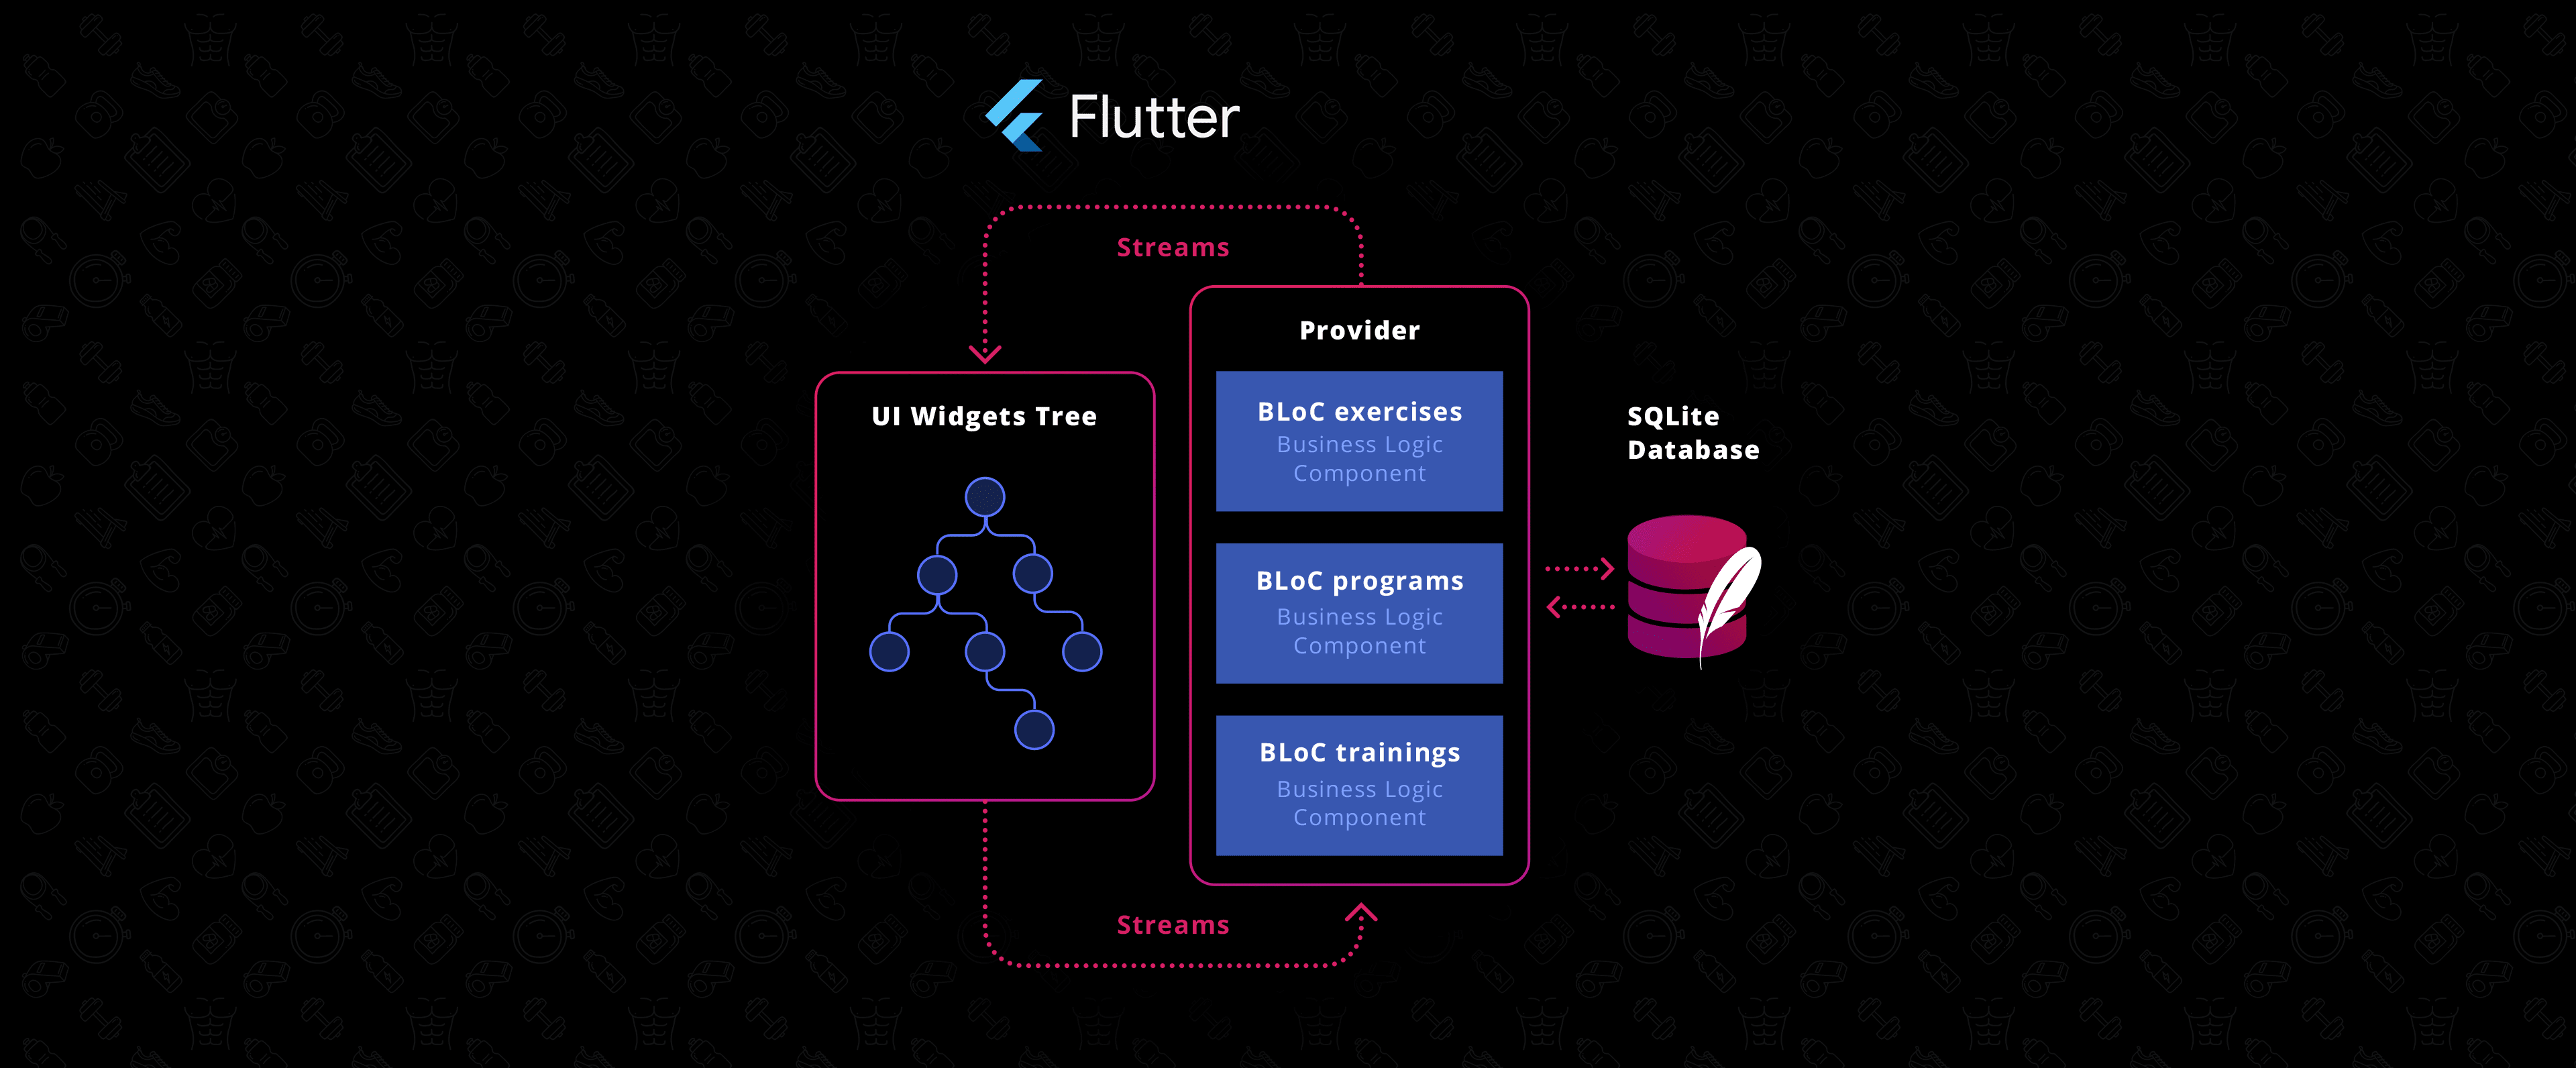 Flutter allows for 1 second compilation